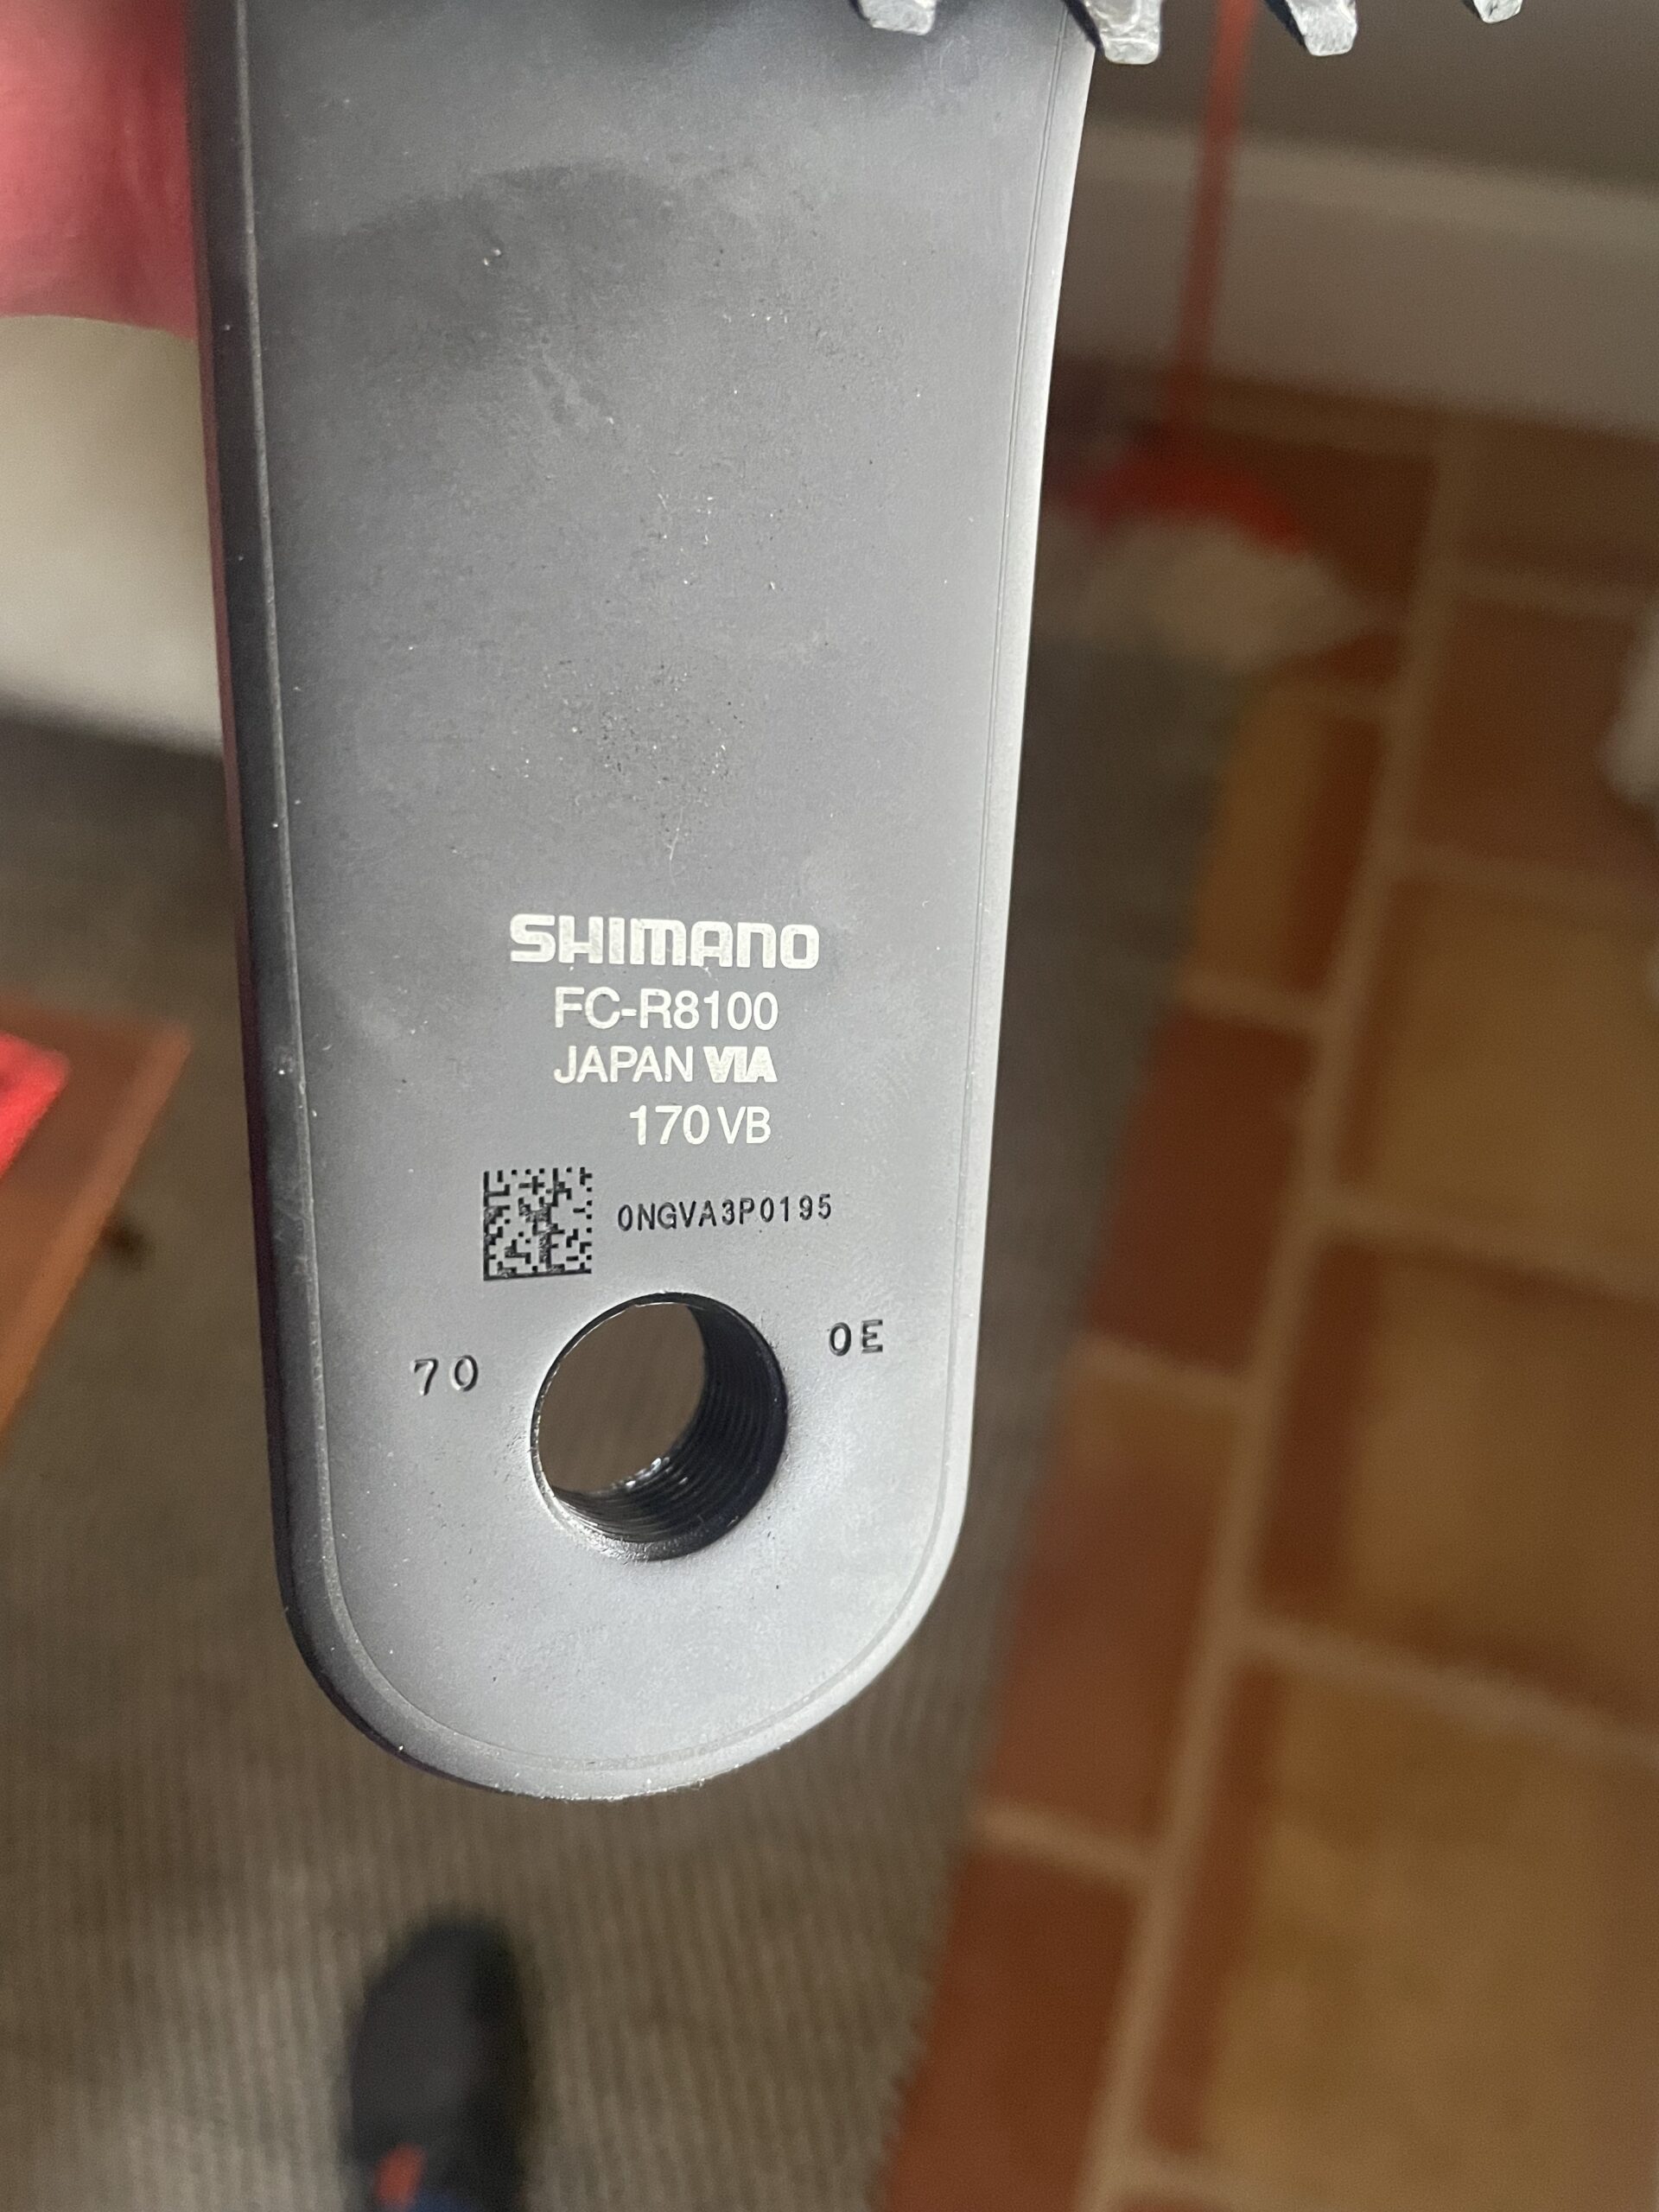 Shimano Ultegra 170 mm Crankset 50/34 like new